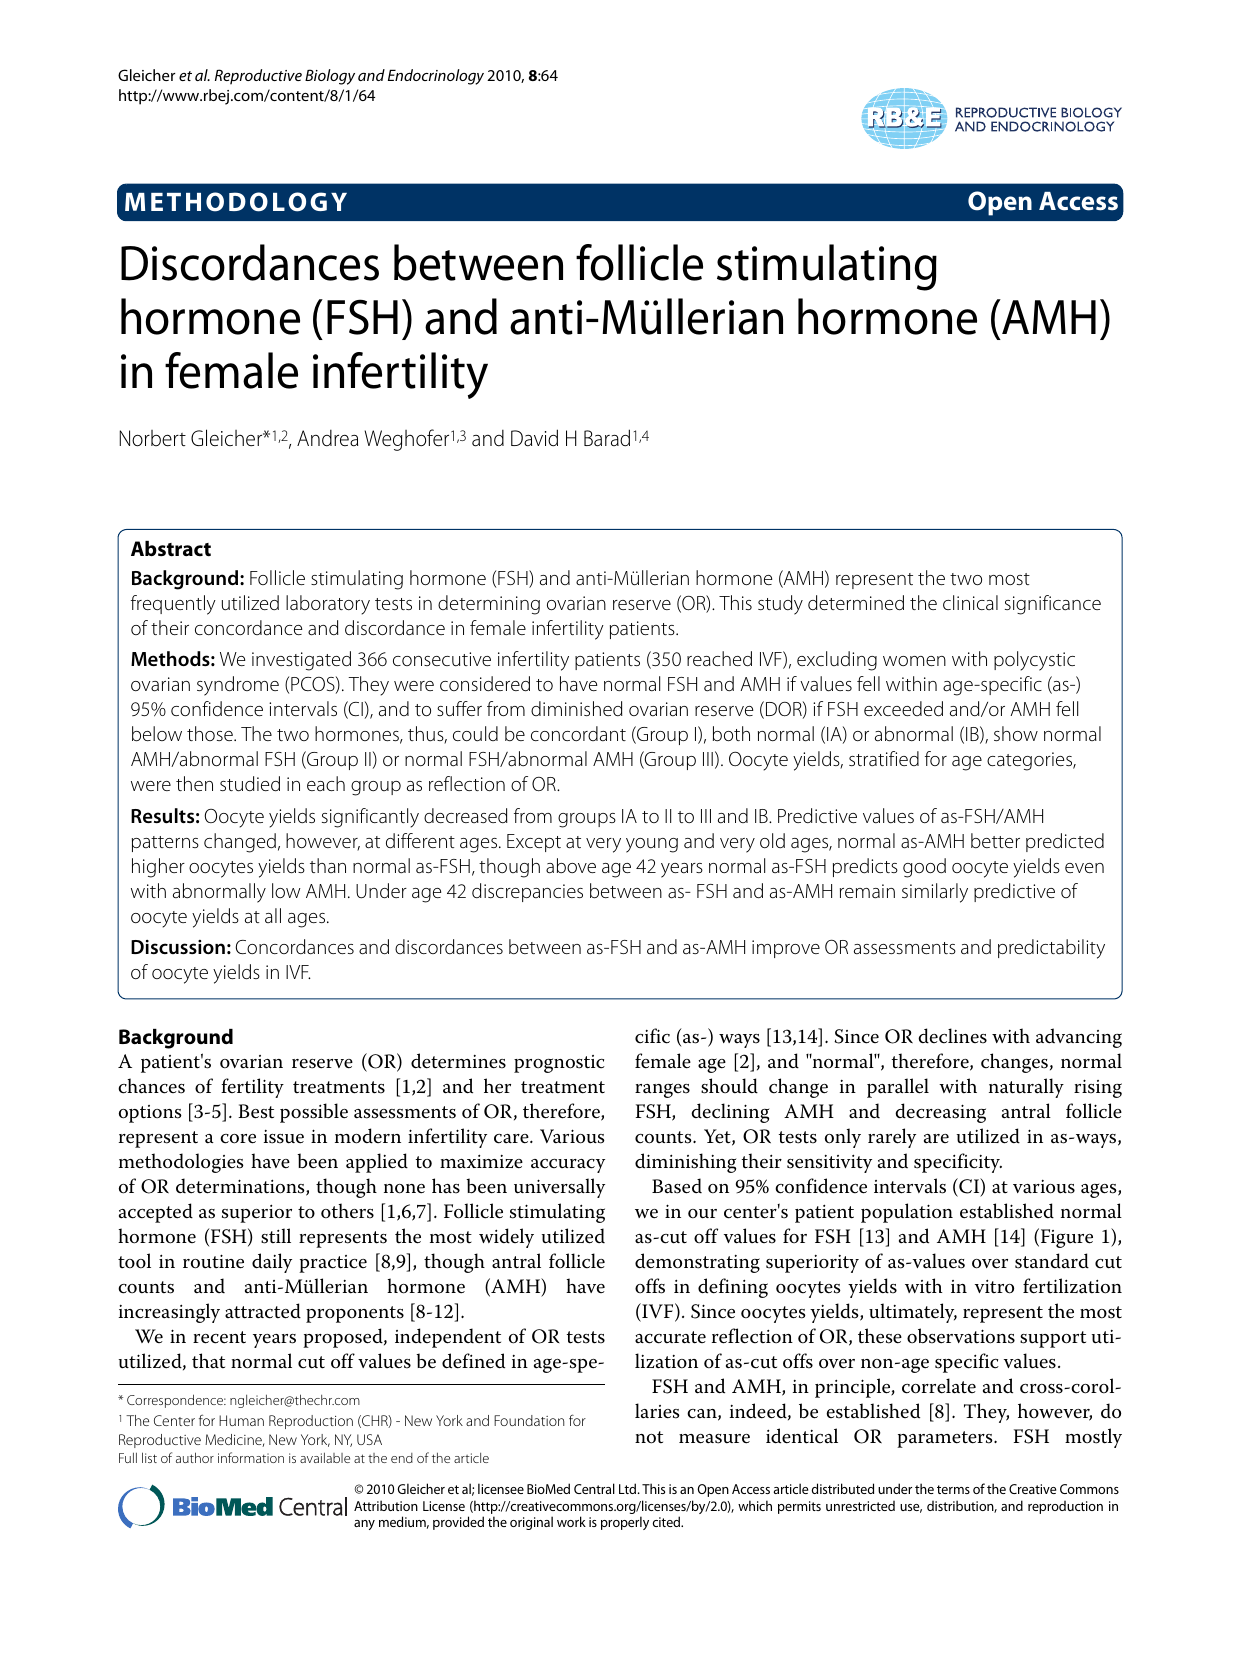 Discordances between follicle stimulating hormone (FSH ...